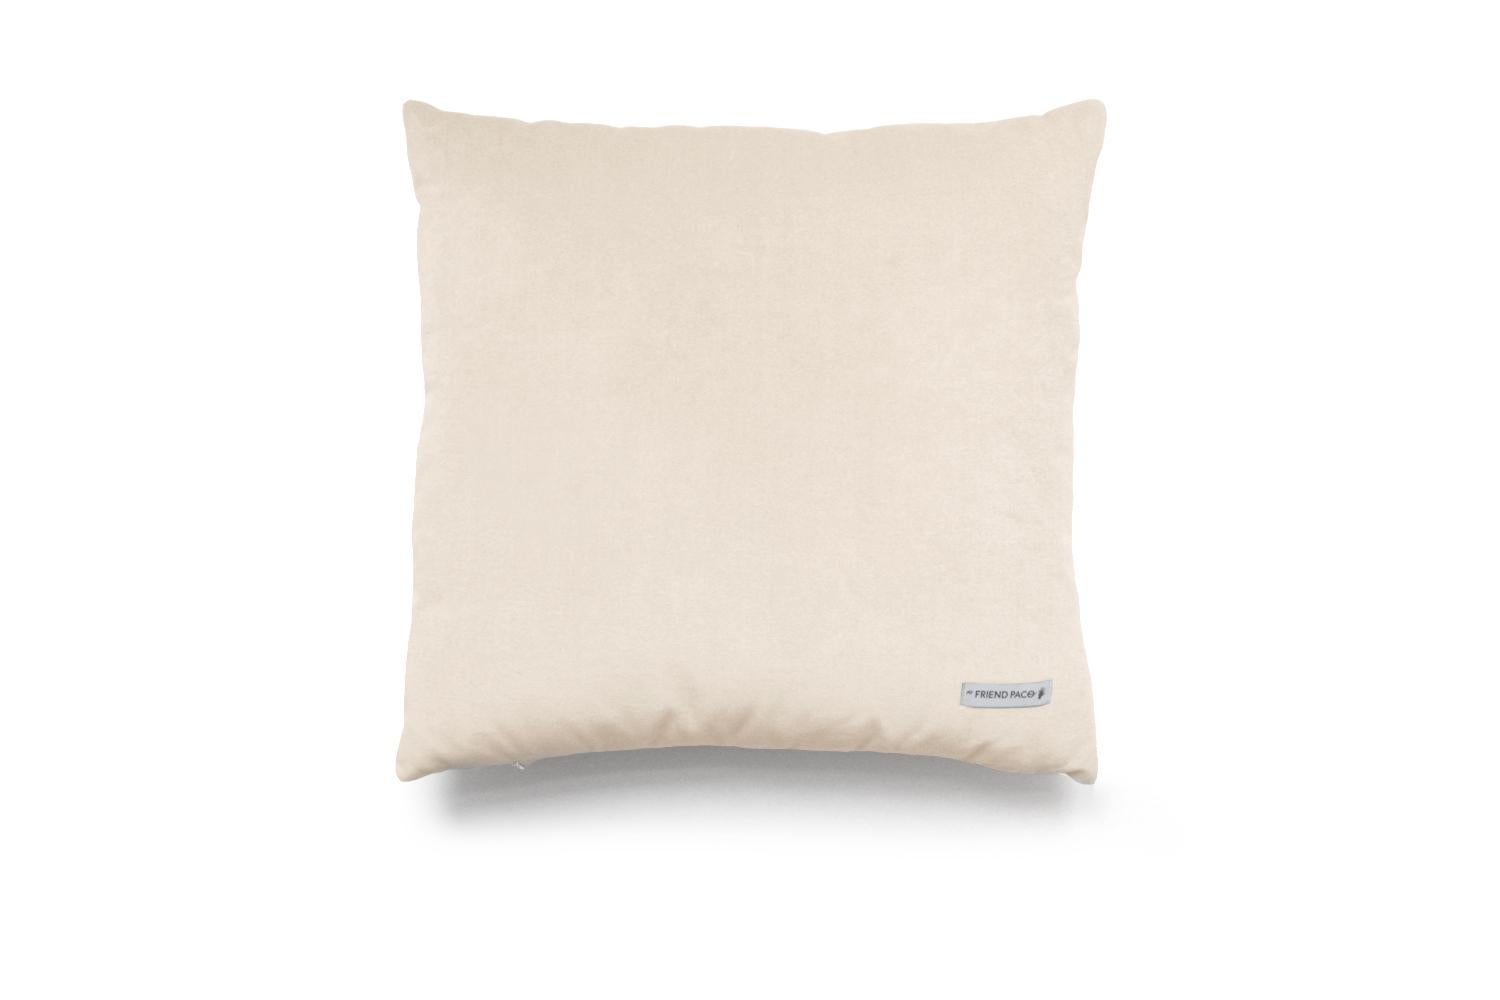 Portuguese Gemma cobalt blue & Brown Velvet Deluxe Handmade Decorative Pillow For Sale